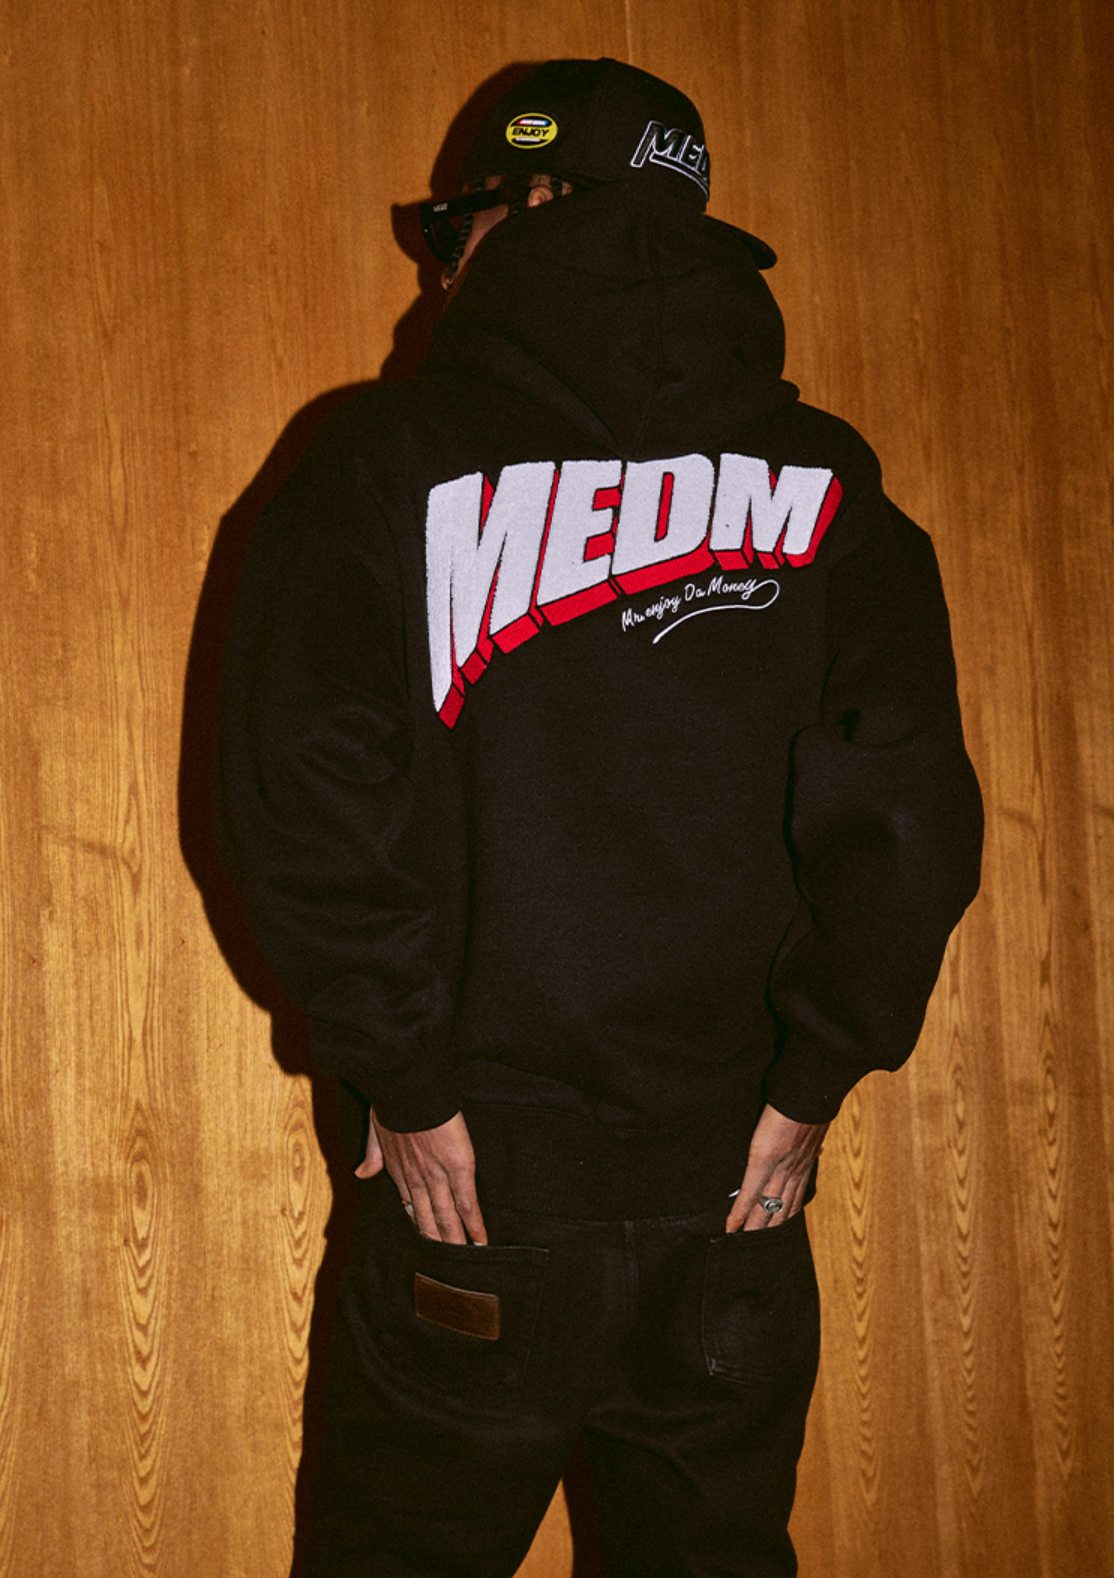 MEDM Ins Wind Super Fire Logo Hoodie